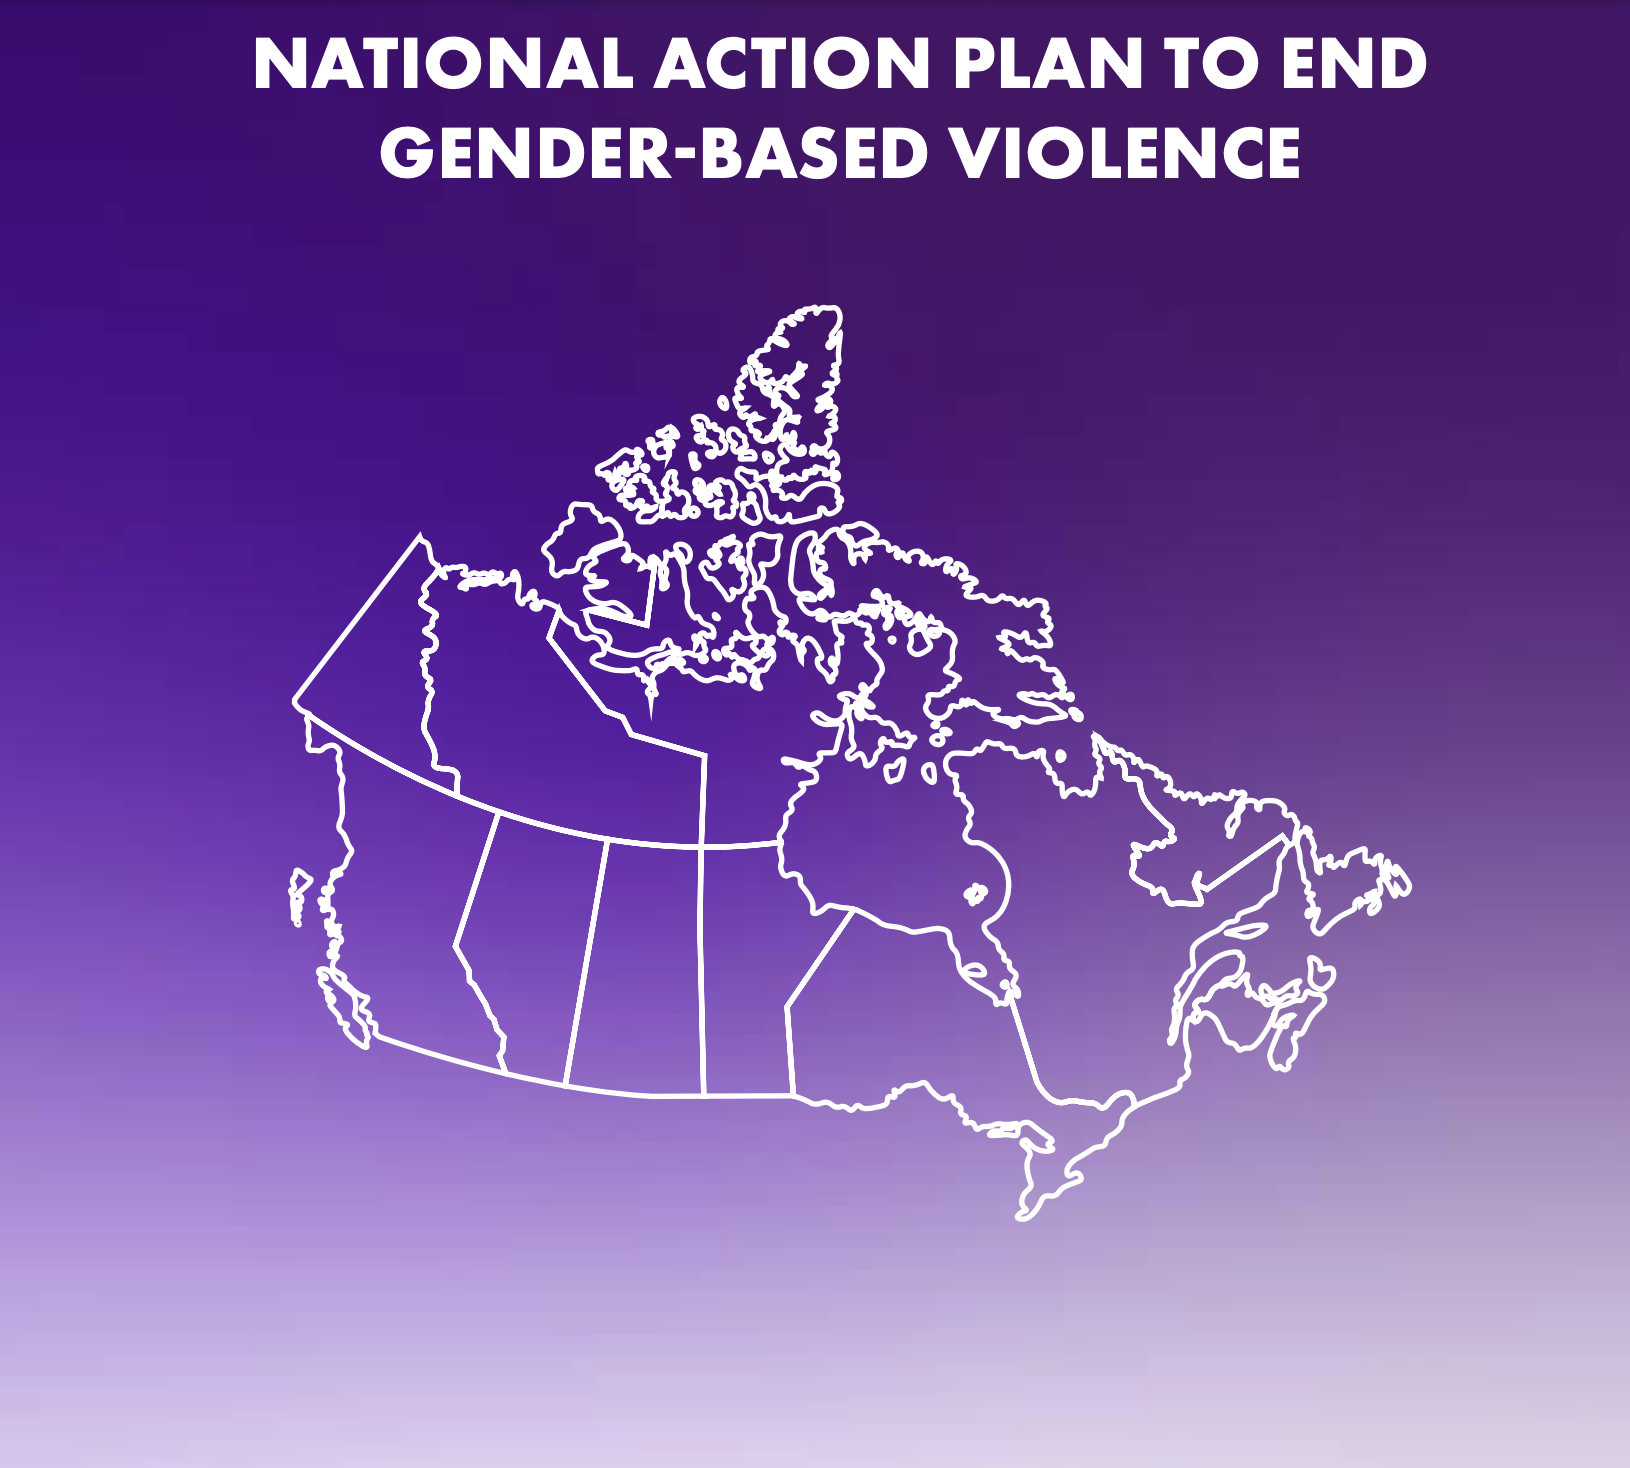 Ministers endorse National Action Plan to End Gender-Based Violence